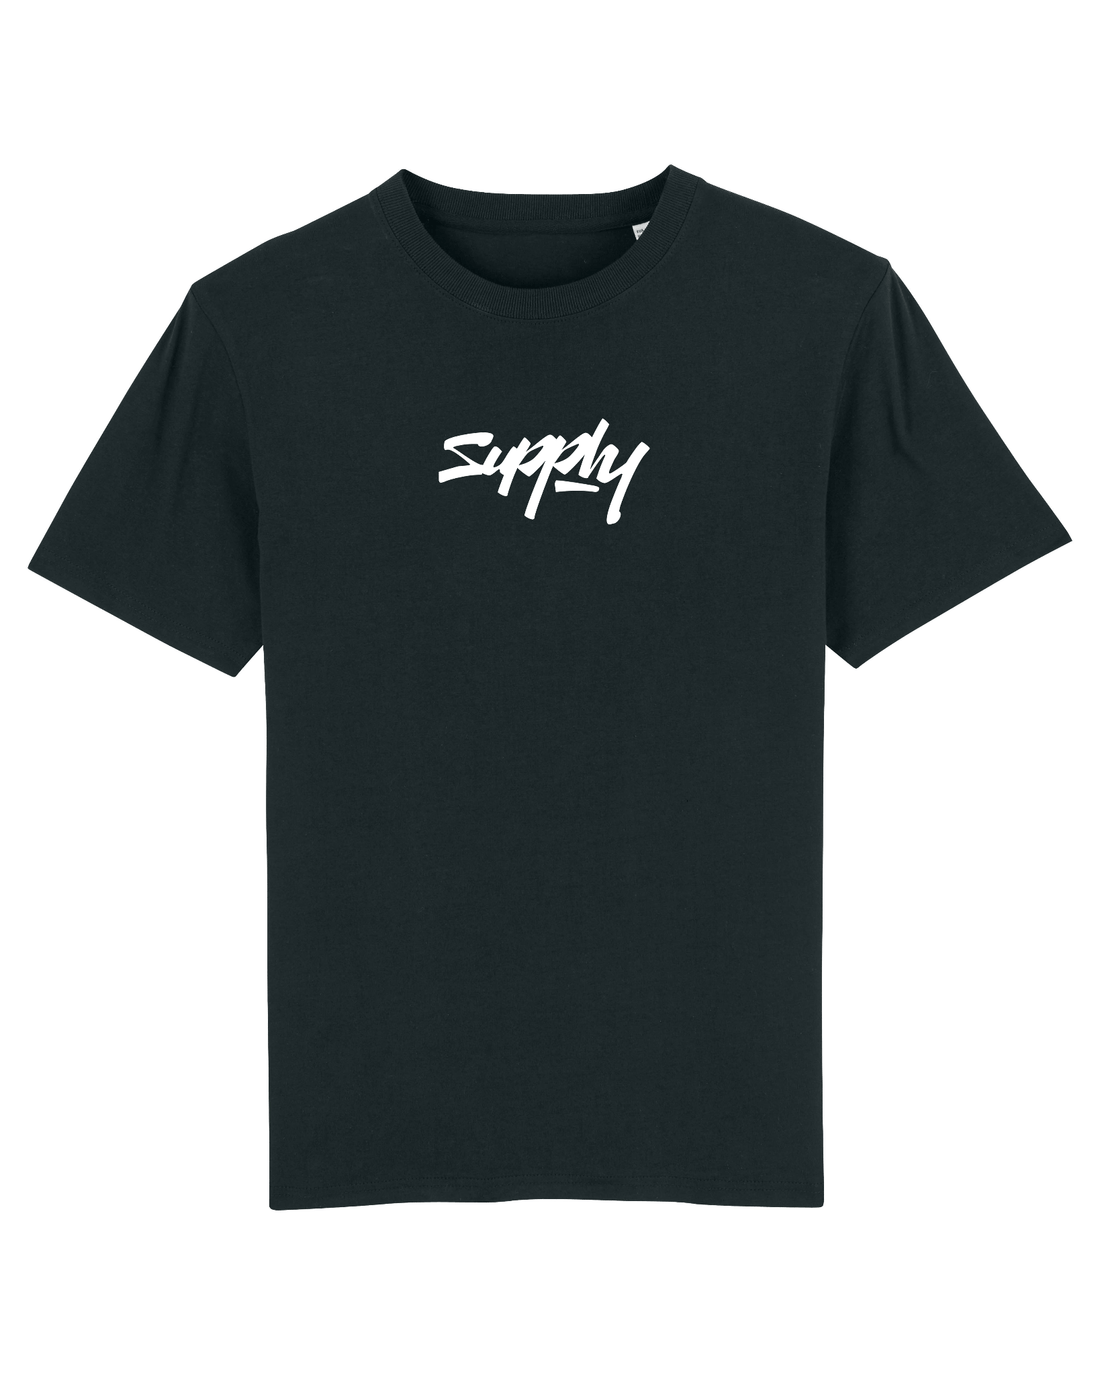 Black Skater T-Shirt, Supply Logo Front Print